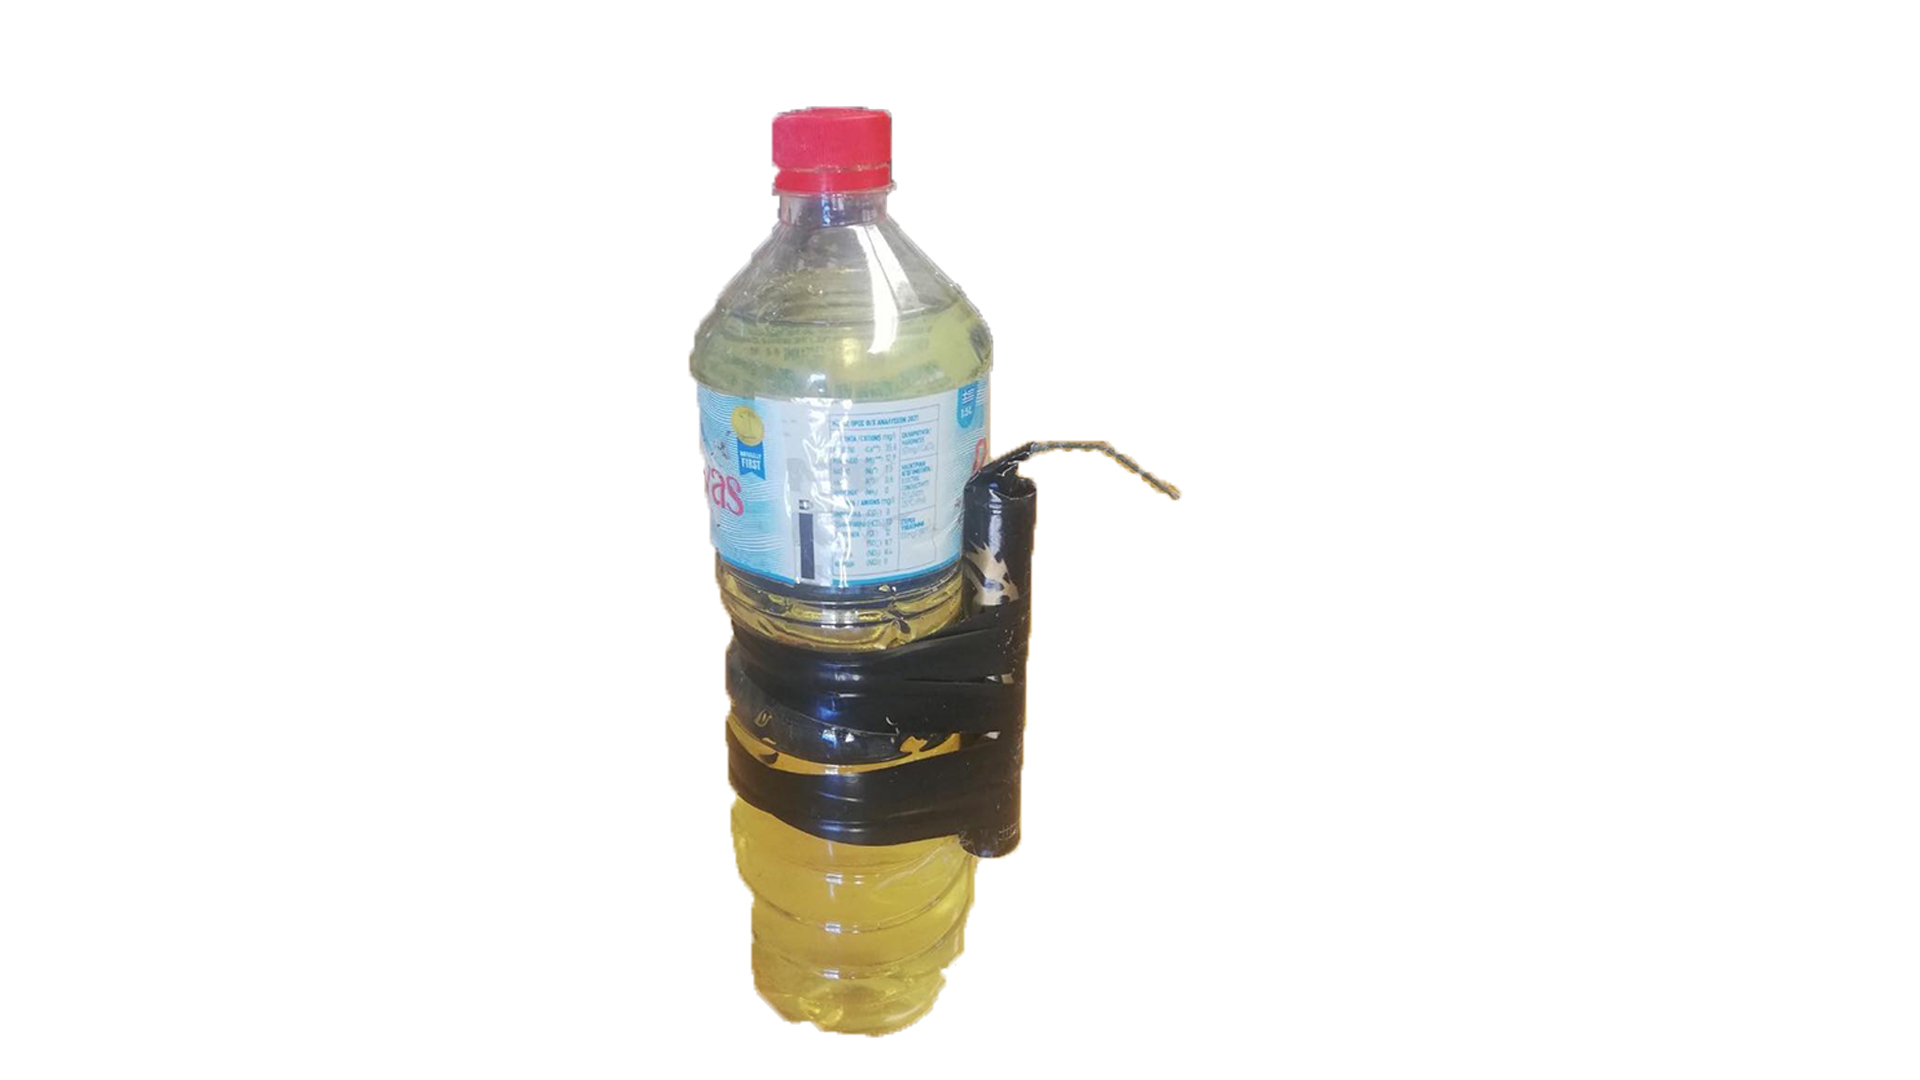 Gasoline bottle with firecracker